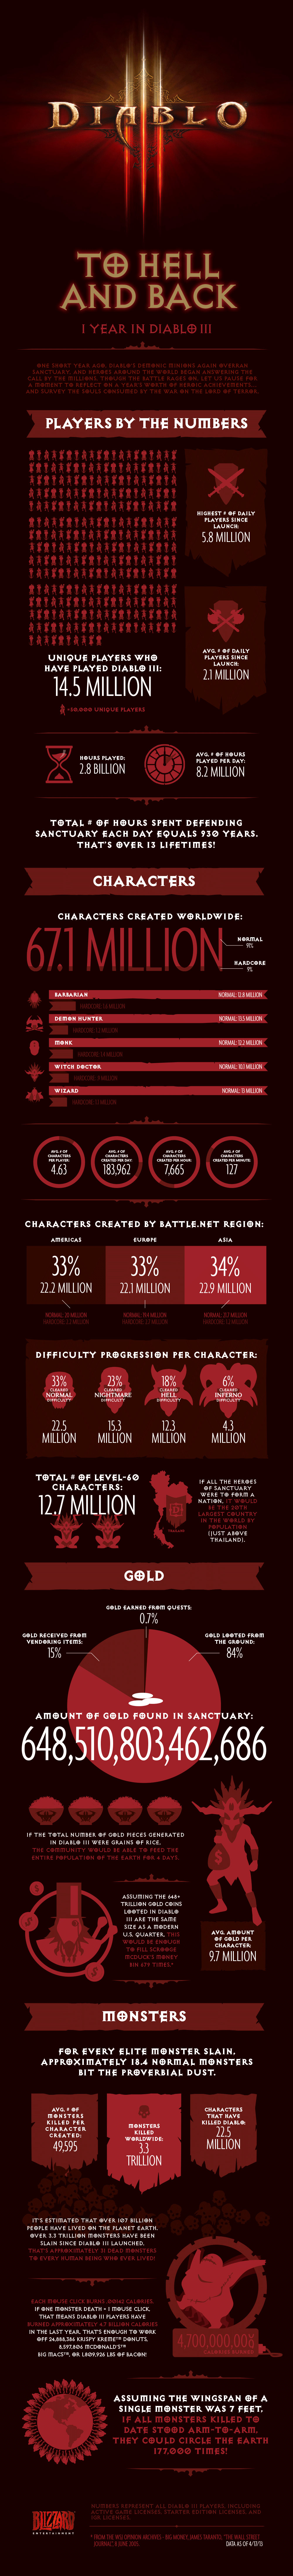 Diablo III’s One-Year Anniversary Infographic.